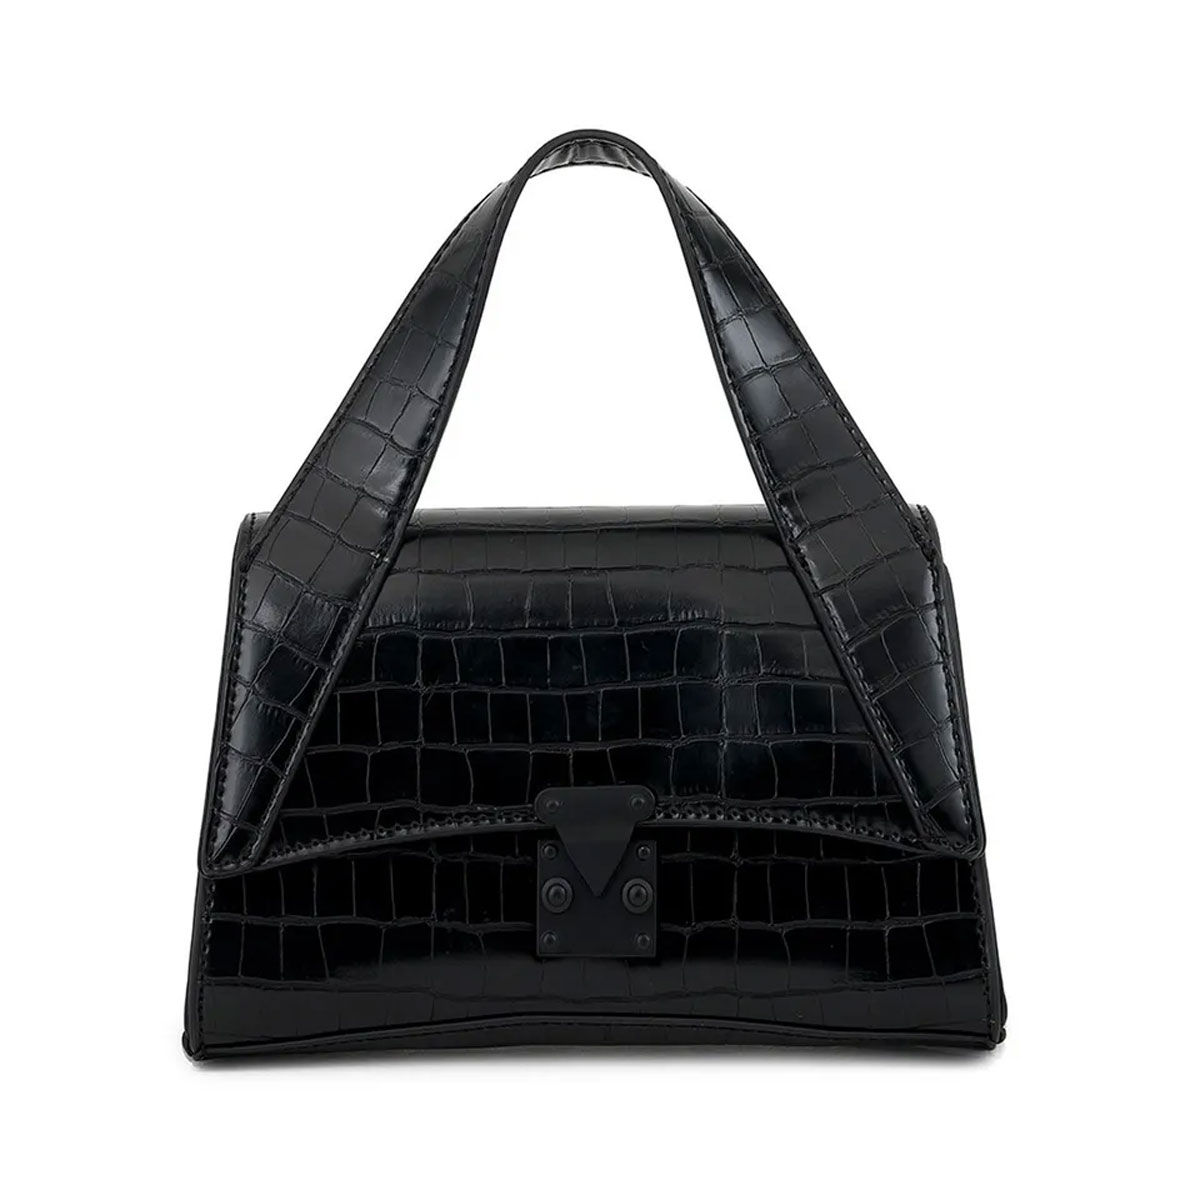 Buy Balenciaga Bags & Handbags online - Women - 310 products